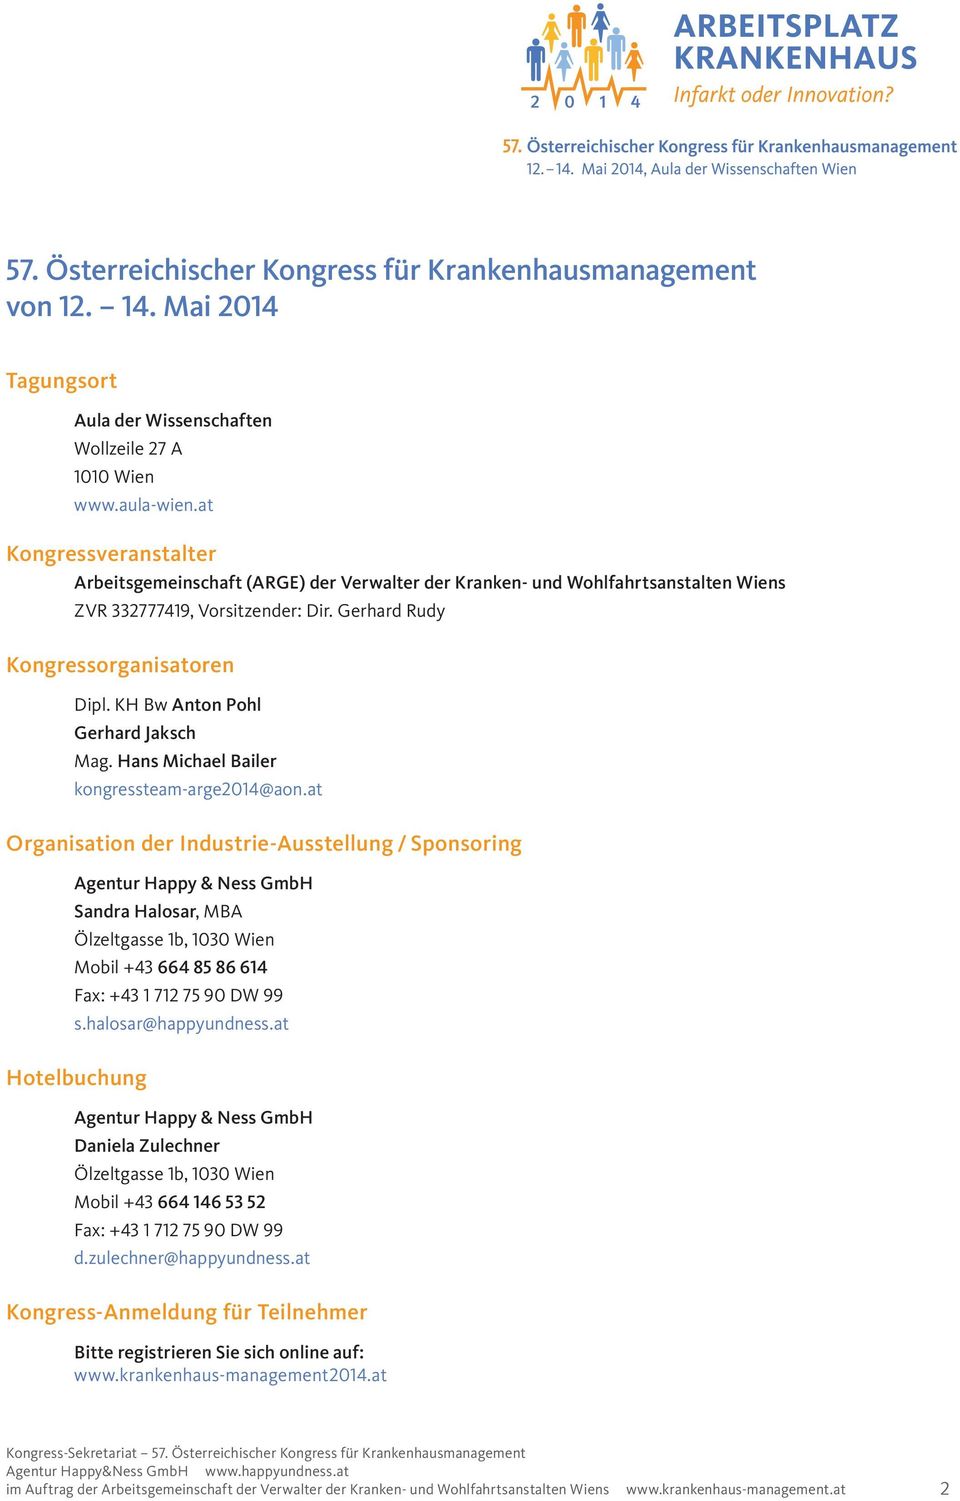 KH Bw Anton Pohl Gerhard Jaksch Mag. Hans Michael Bailer kongressteam-arge2014@aon.